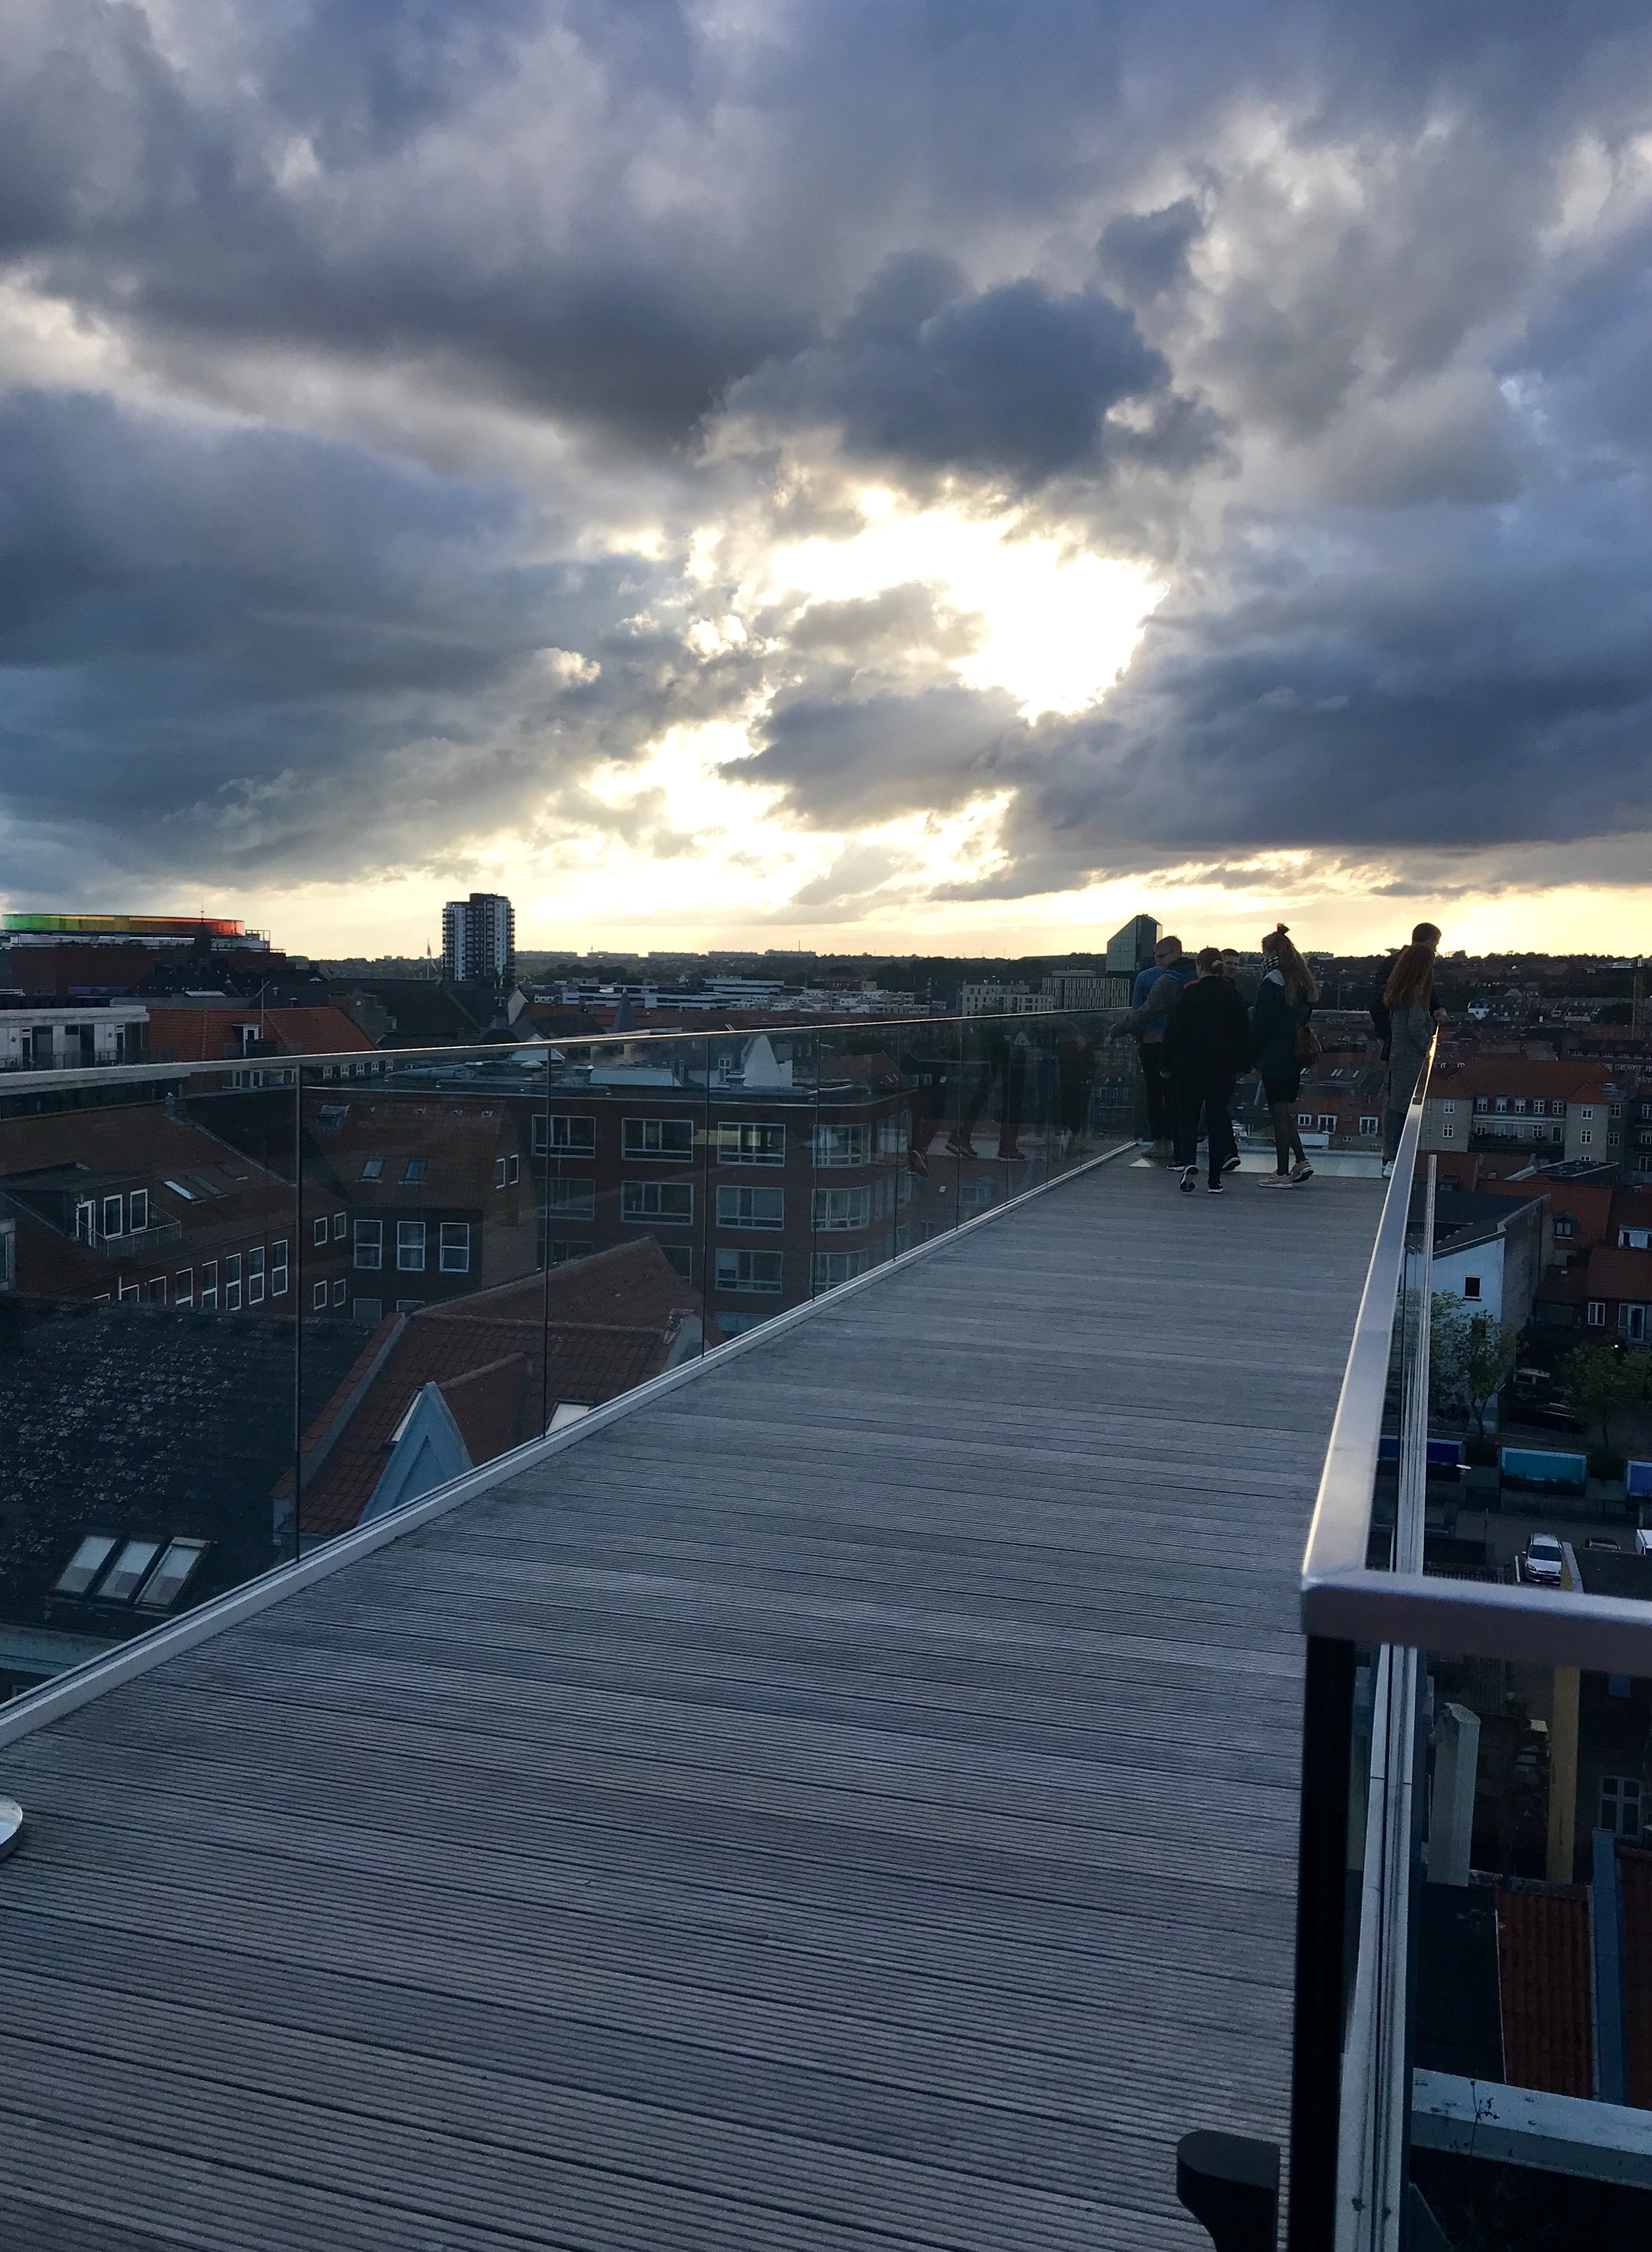 Salling rooftop bar, Aarhus